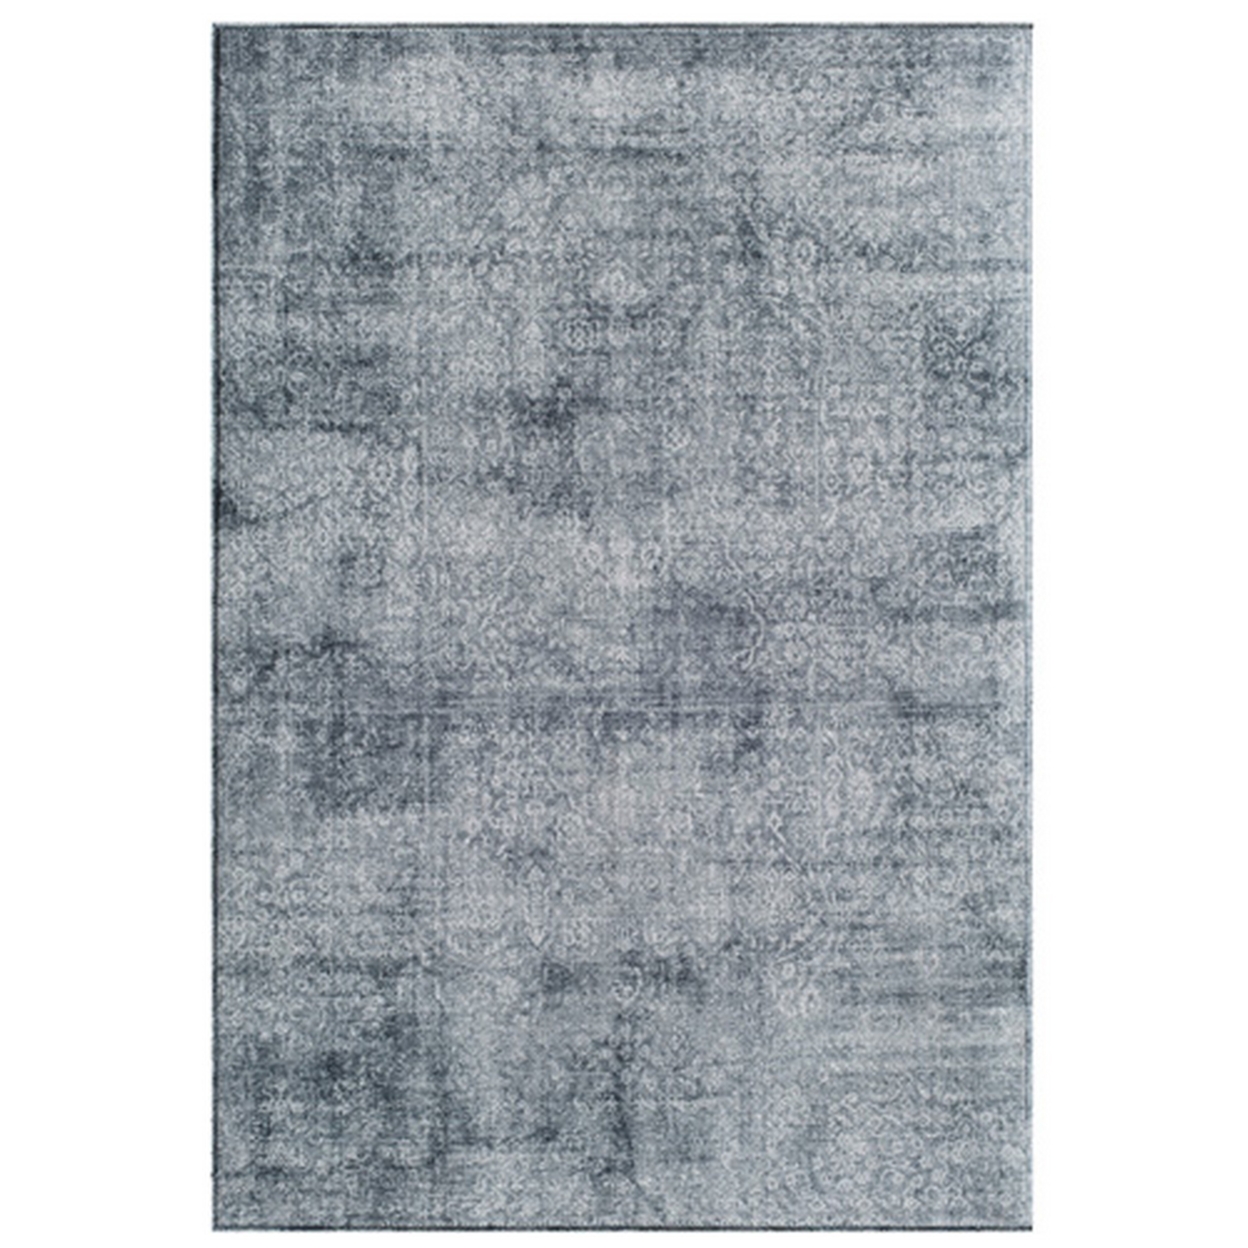 Hynn 8 X 10 Area Rug, Natural Teal Blue Polyester Fabric, Distressed Print- Saltoro Sherpi